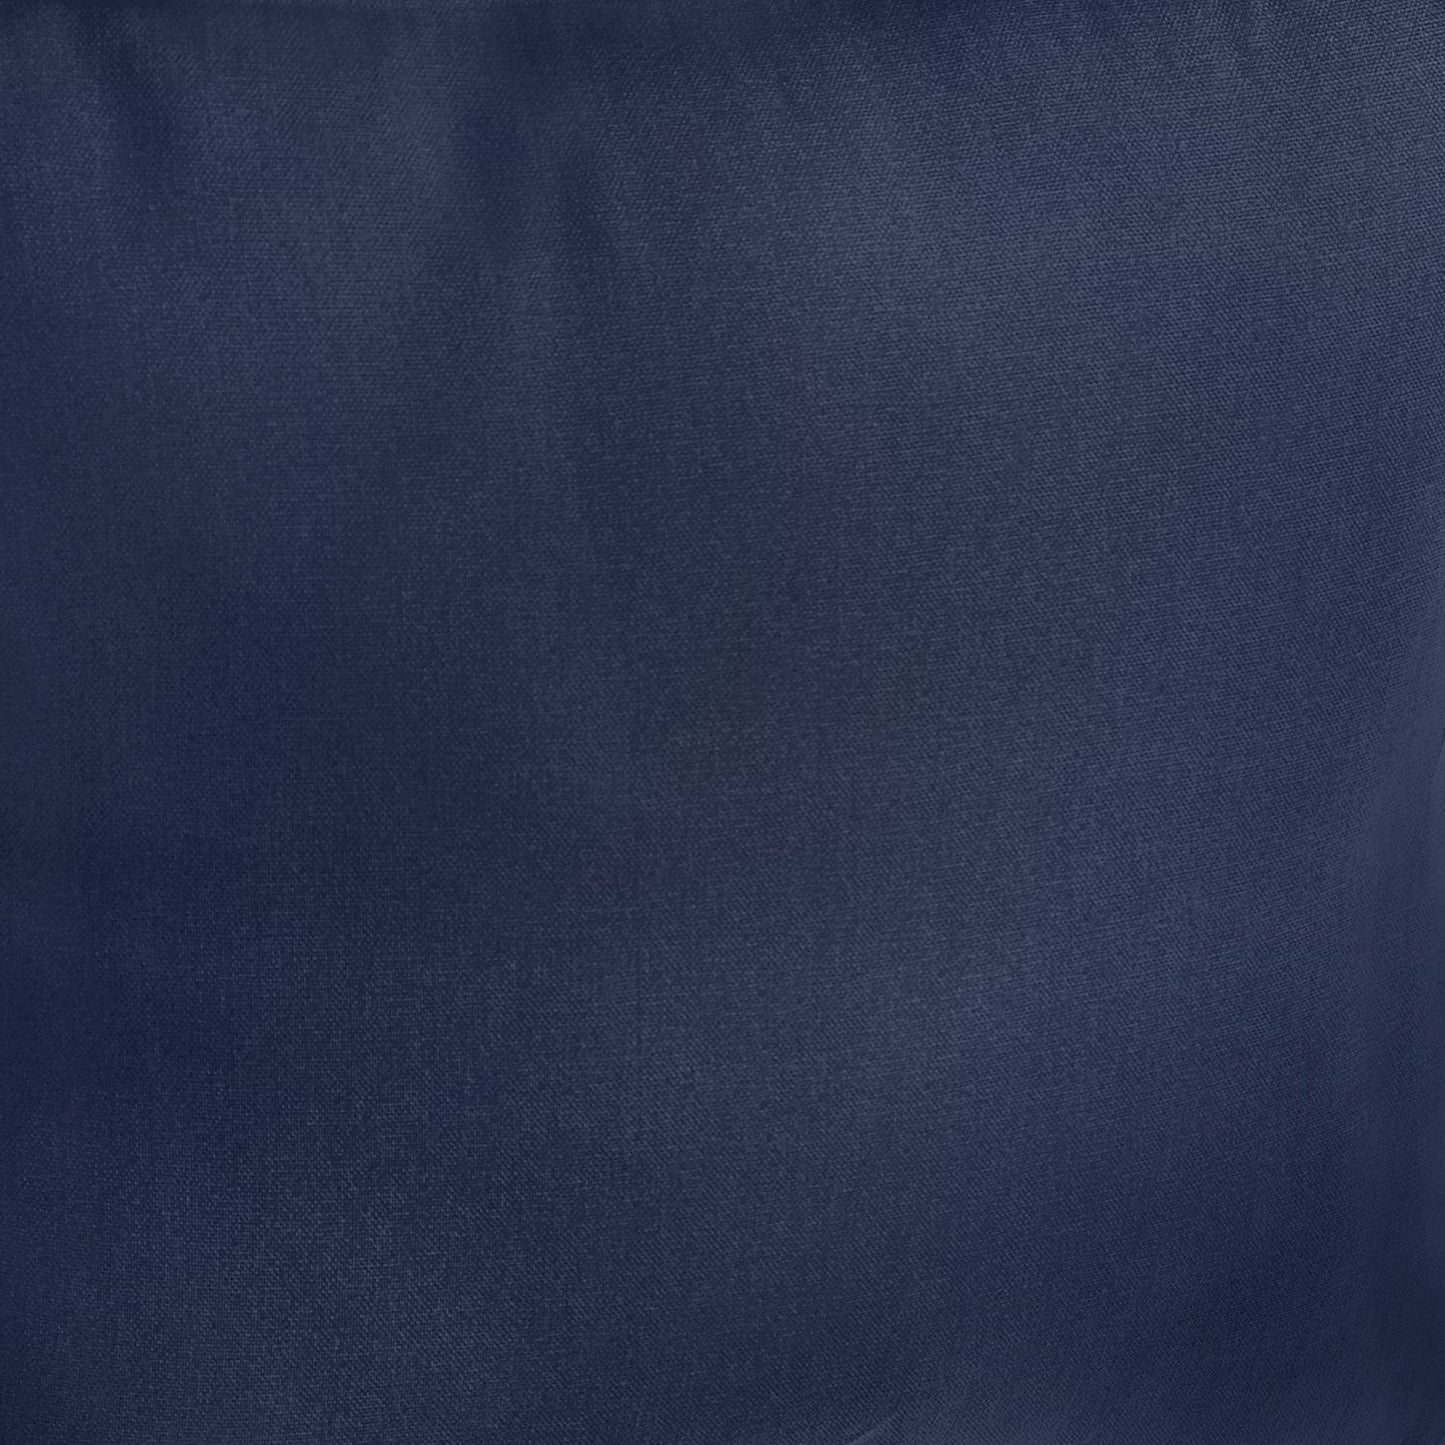 Dijon Navy Blue Blackout Pencil Pleat Curtains